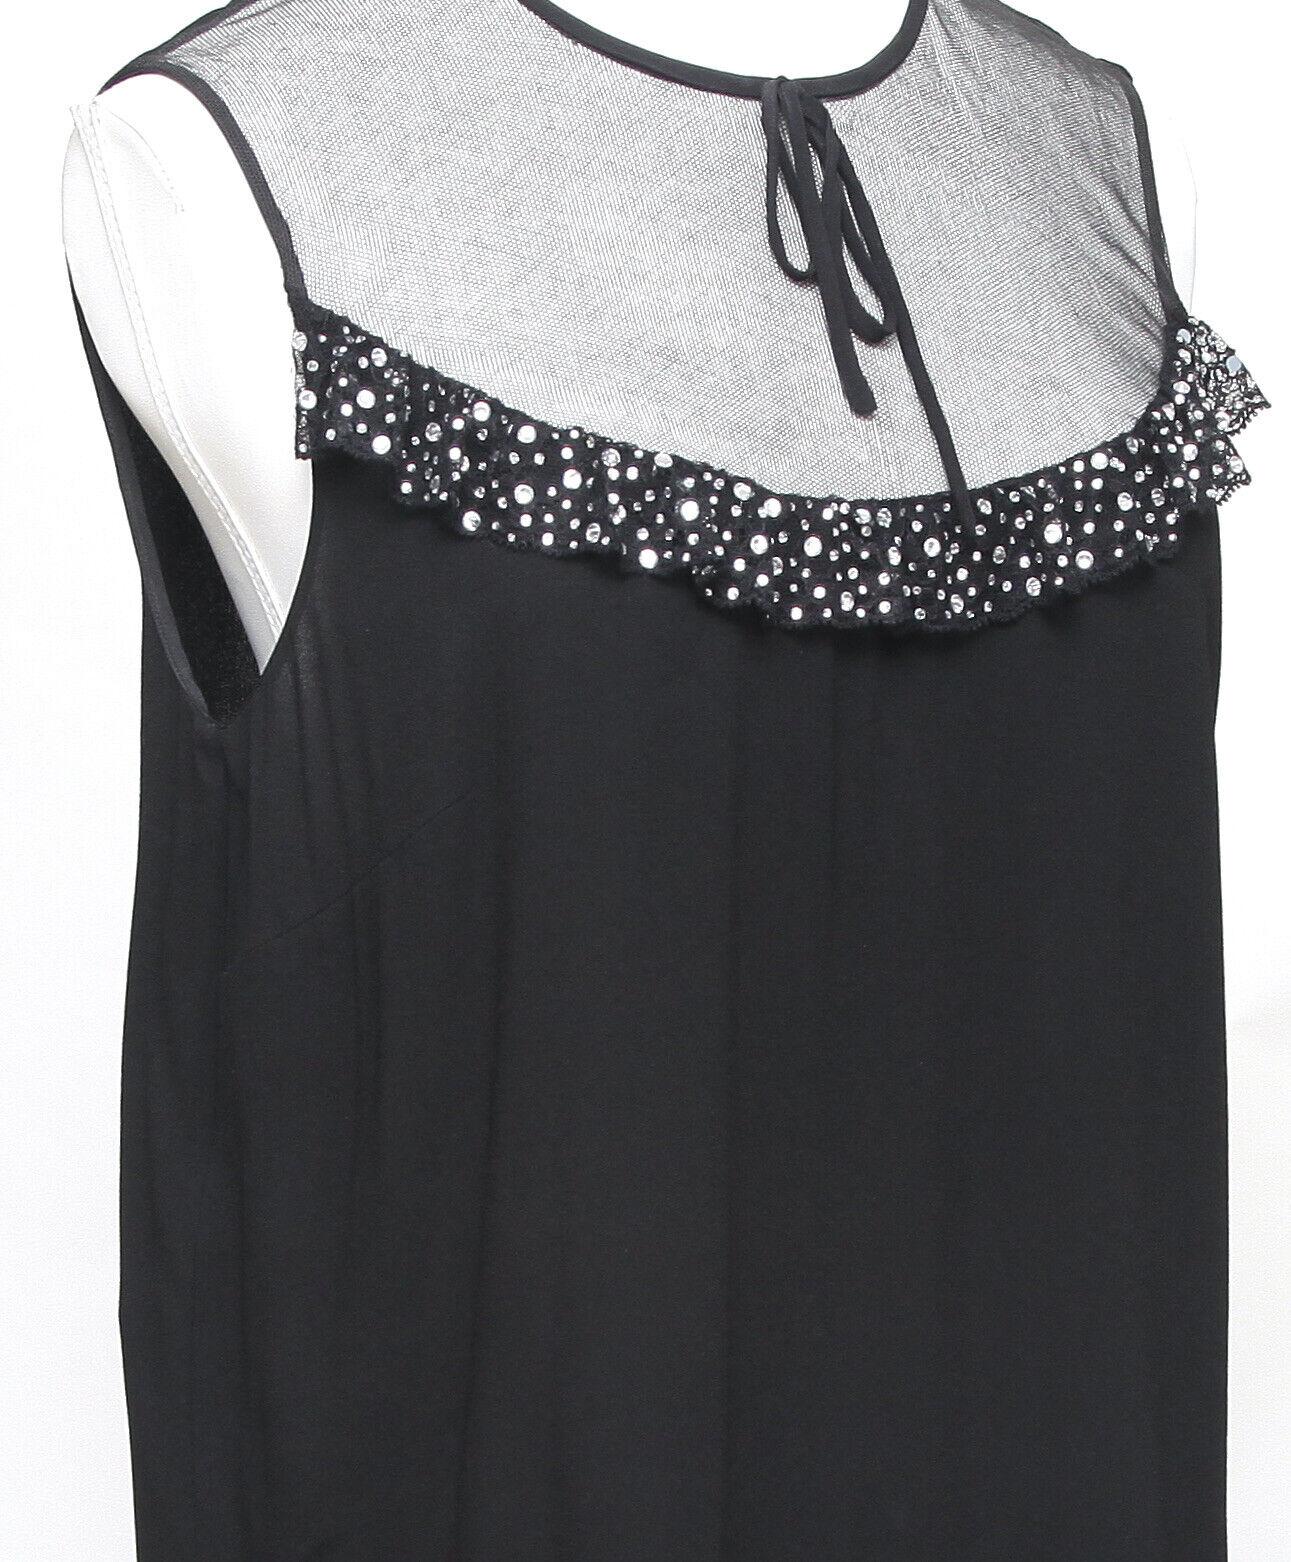 Women's MIU MIU Top Blouse Shirt Sleeveless Black Viscose Tie Sequin Sz 42 NWT For Sale